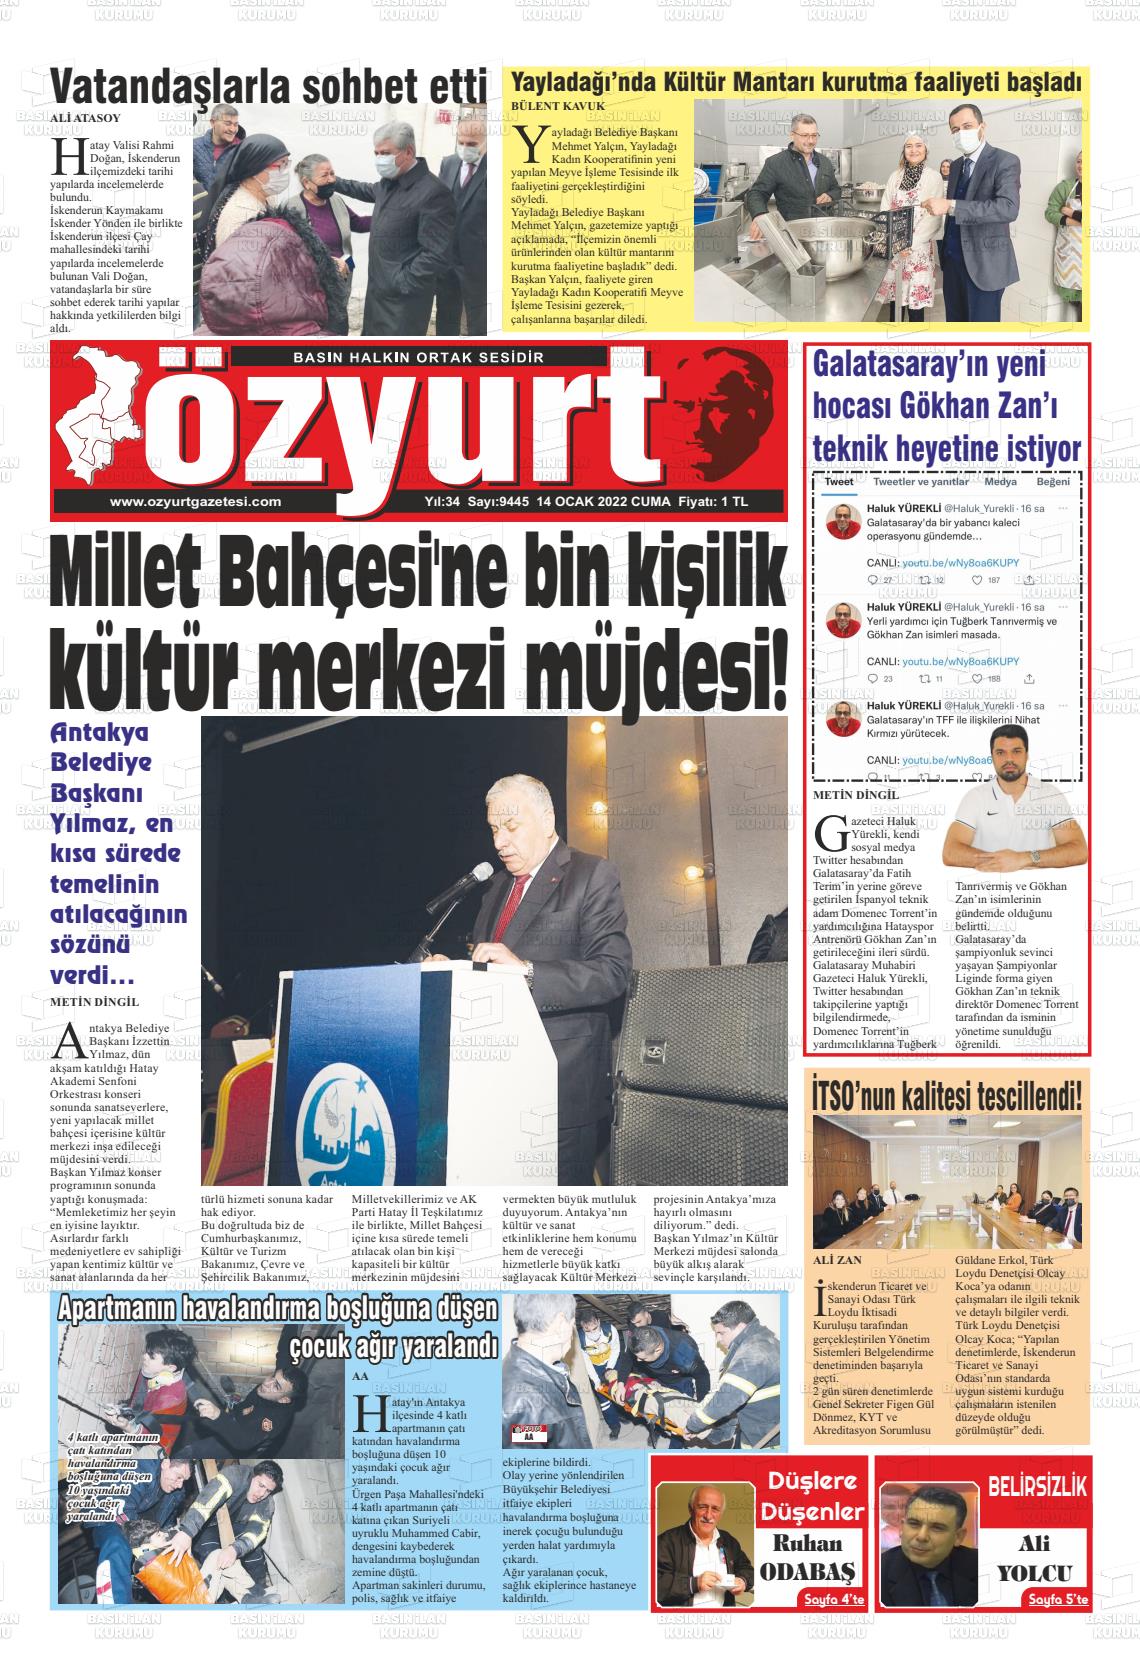 14 Ocak 2022 Özyurt Gazete Manşeti